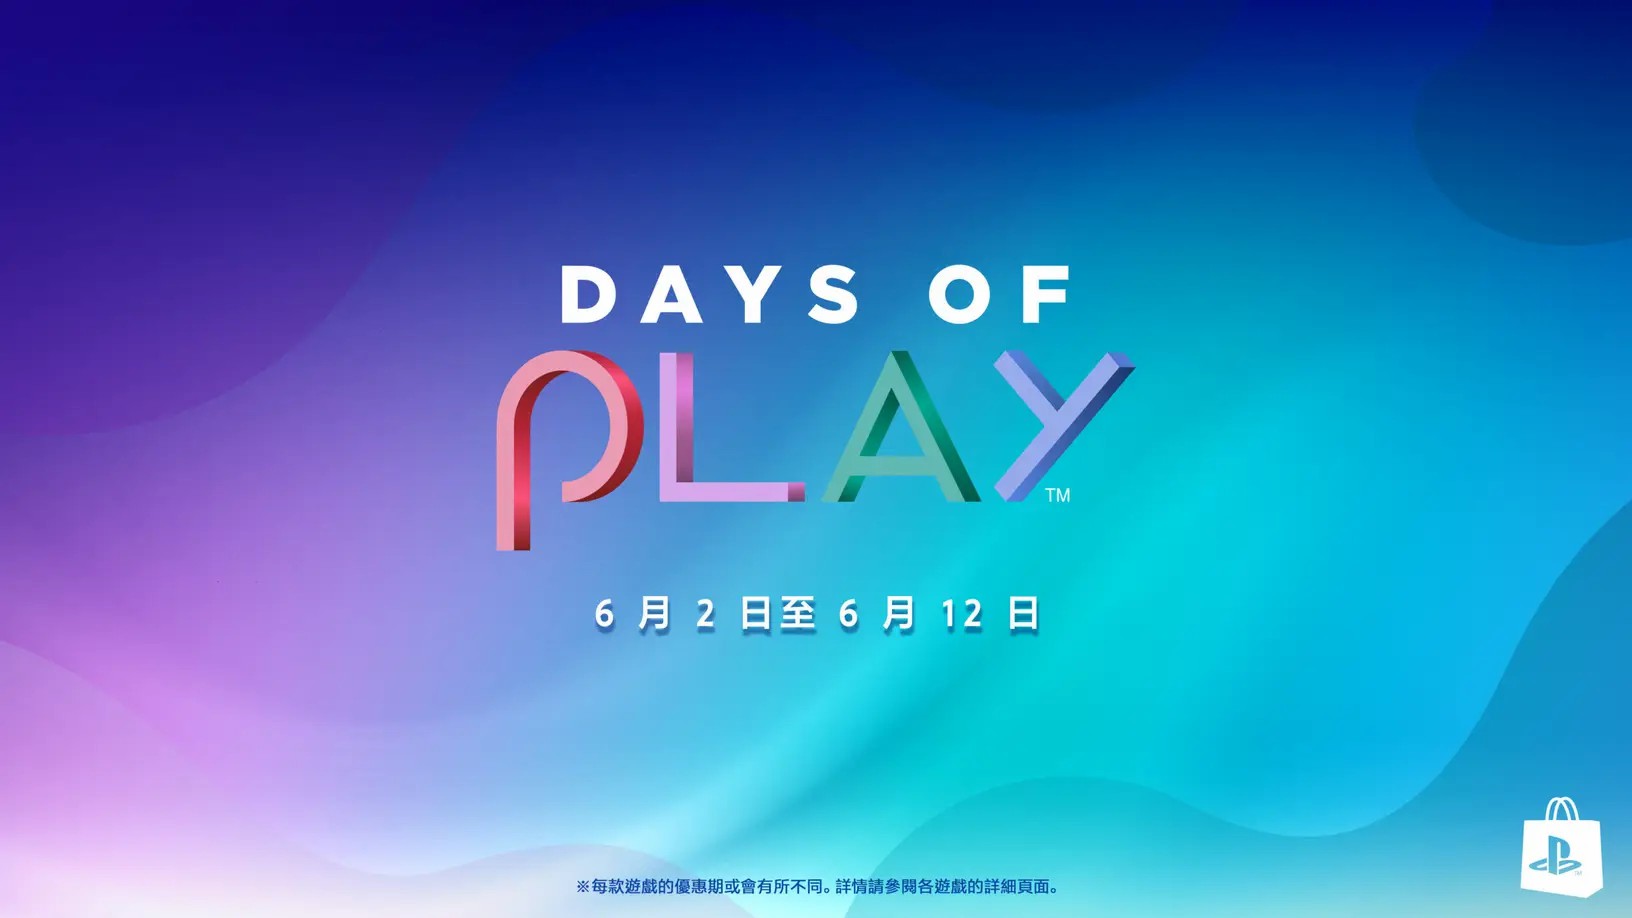 PS年中大促“DAYS OF PLAY”正式開啓 會員75折優惠